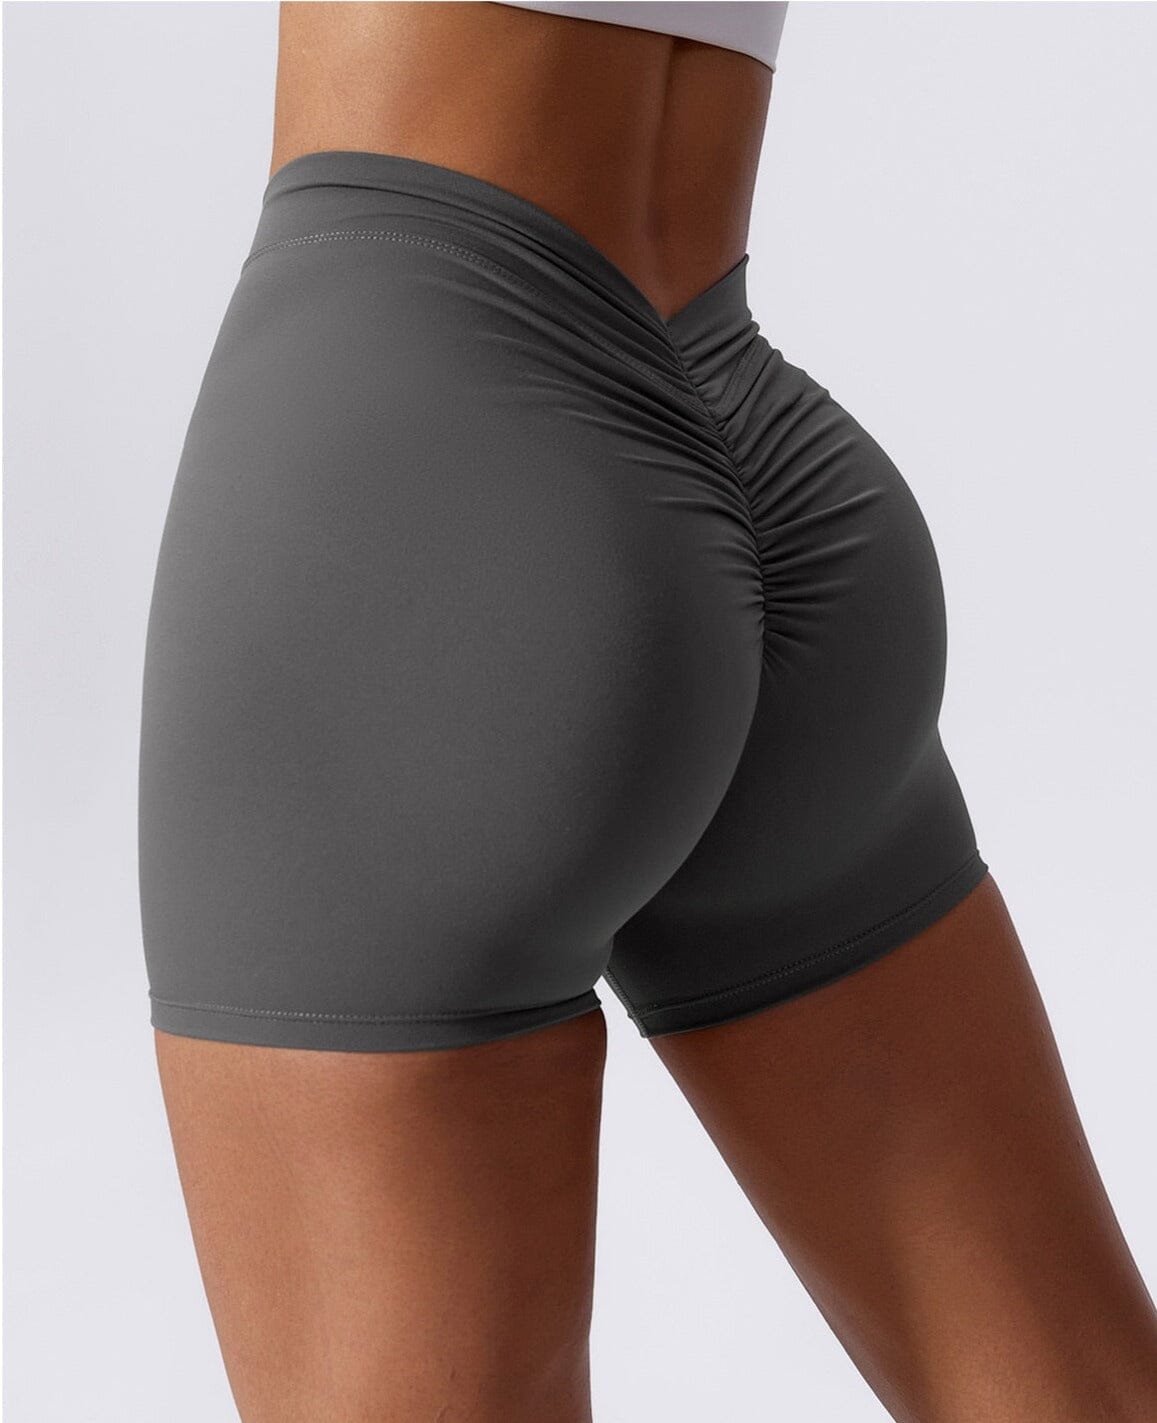 PowerStretch Squat-Proof Shorts Shorts Starlethics Gray S 